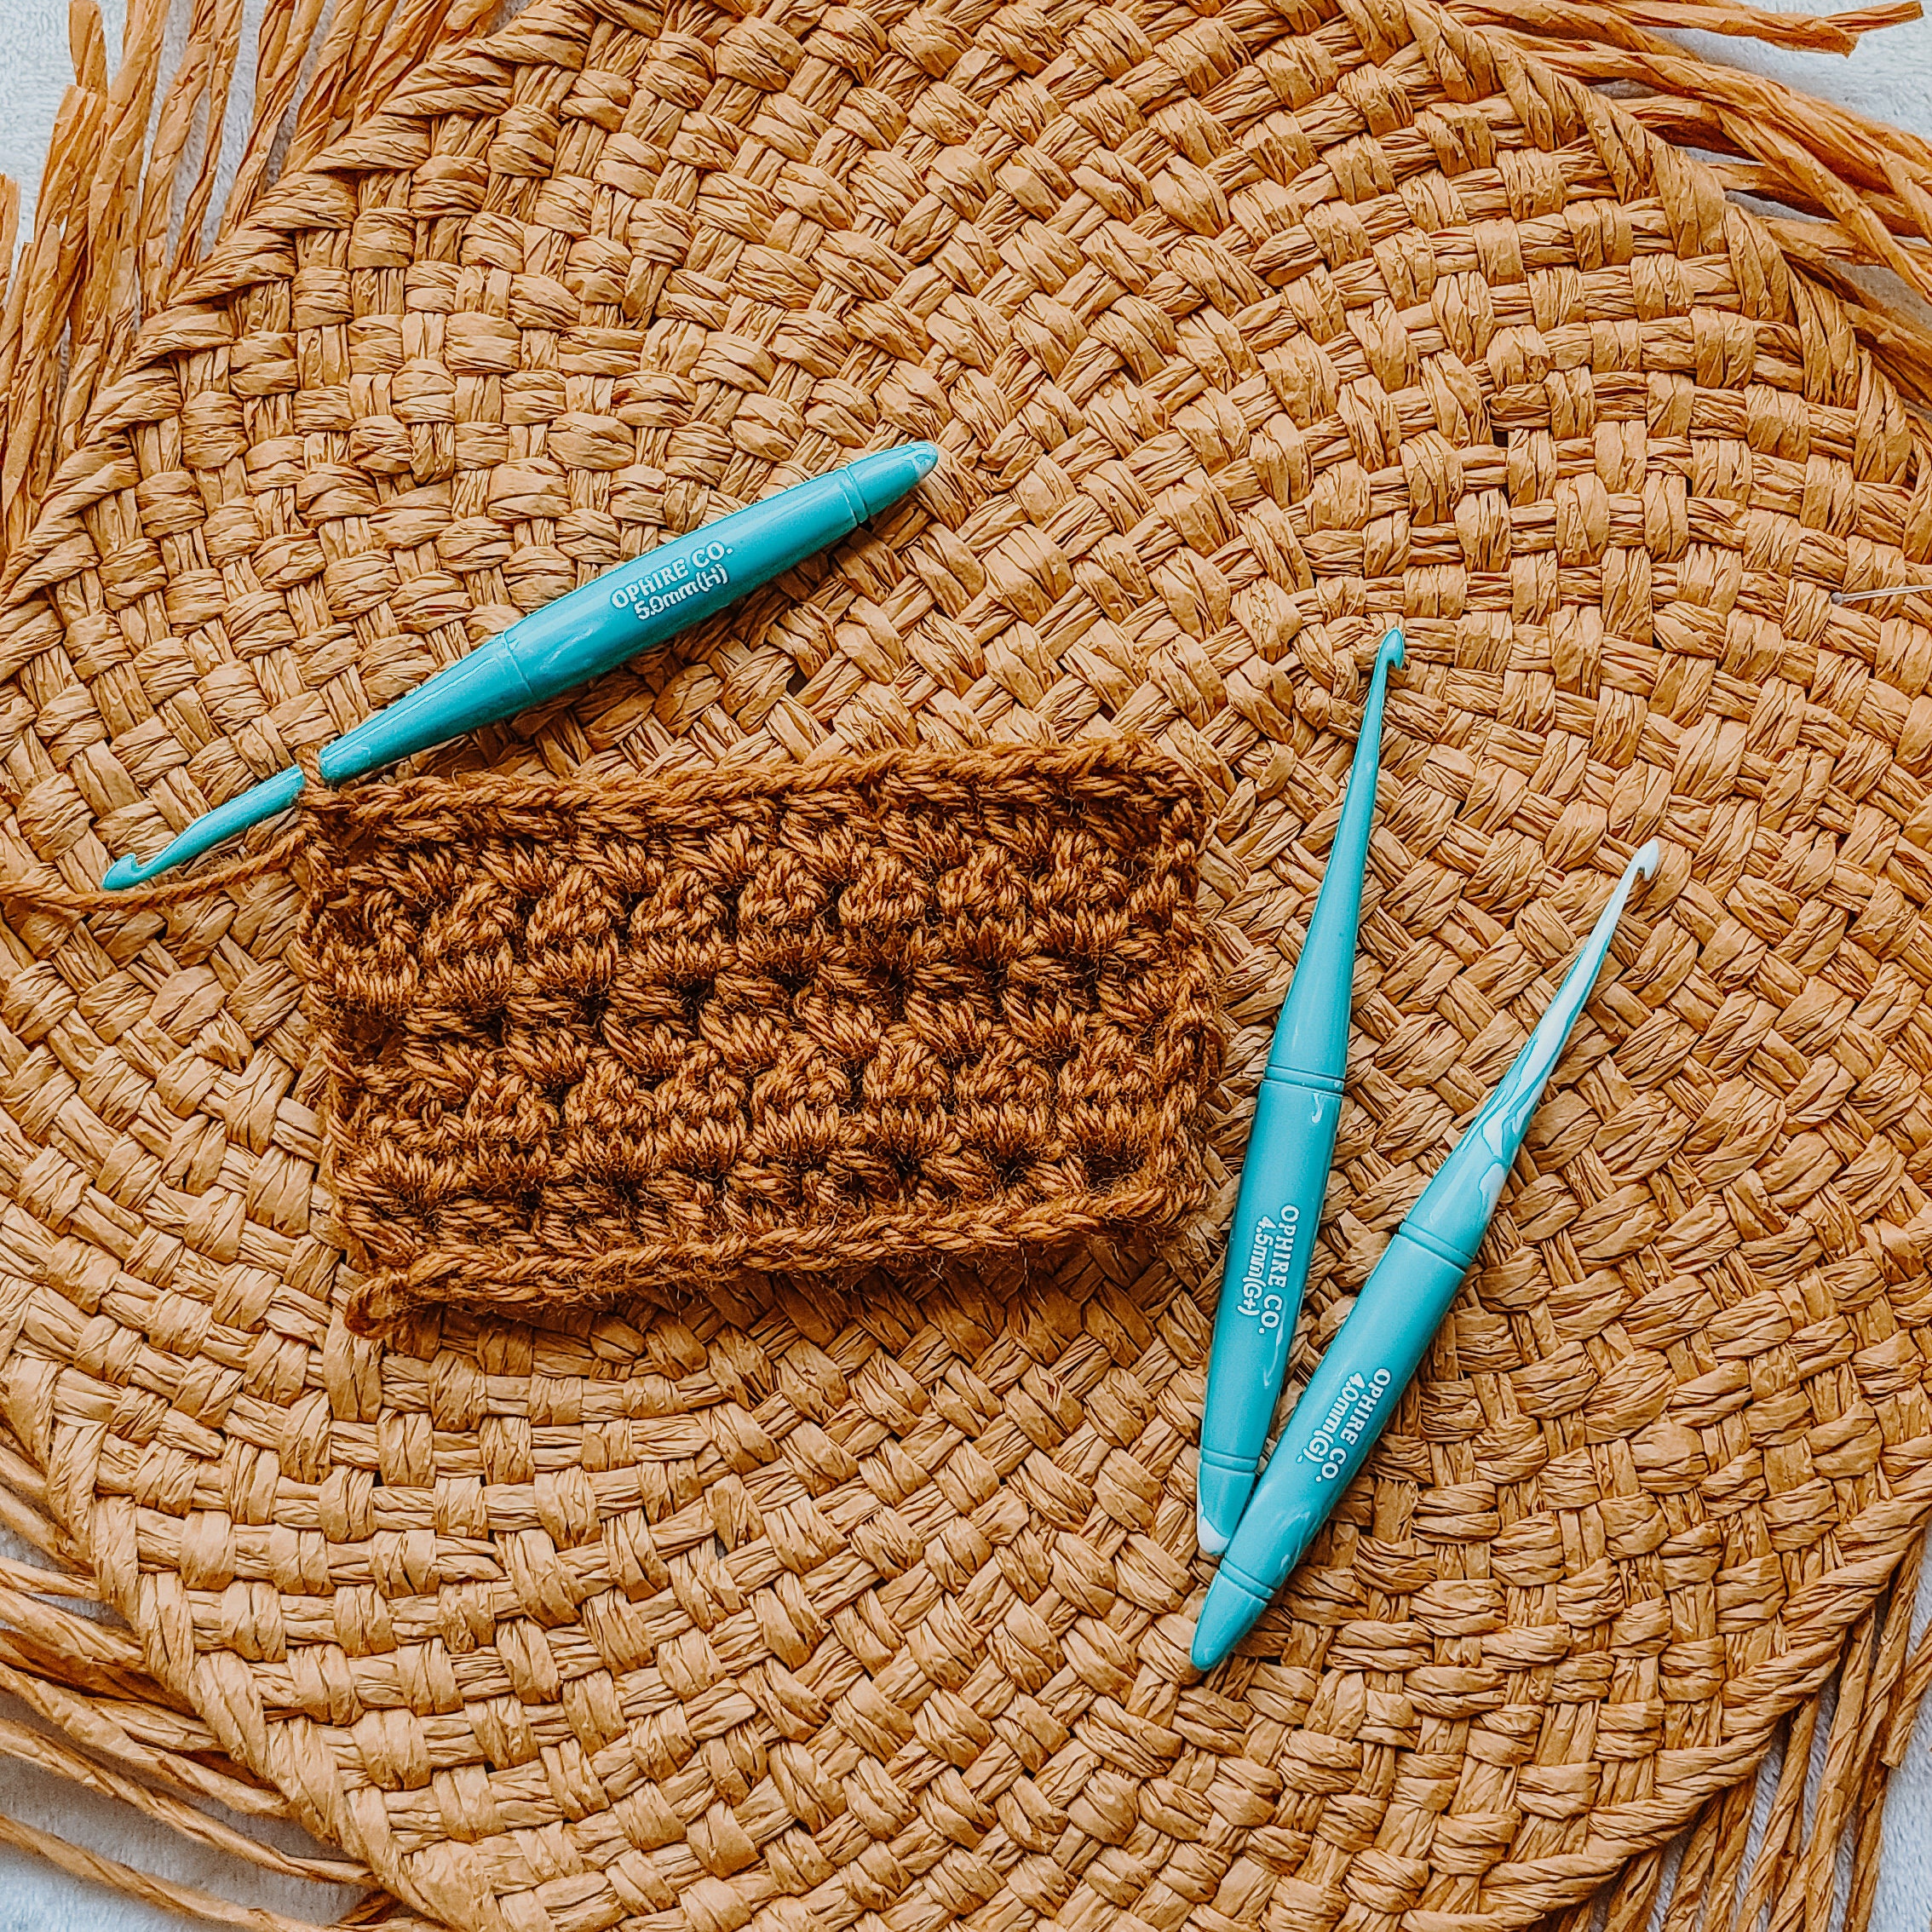 CUSTOM ORDER  Ergonomic Crochet Hook – CroChic Styles, LLC